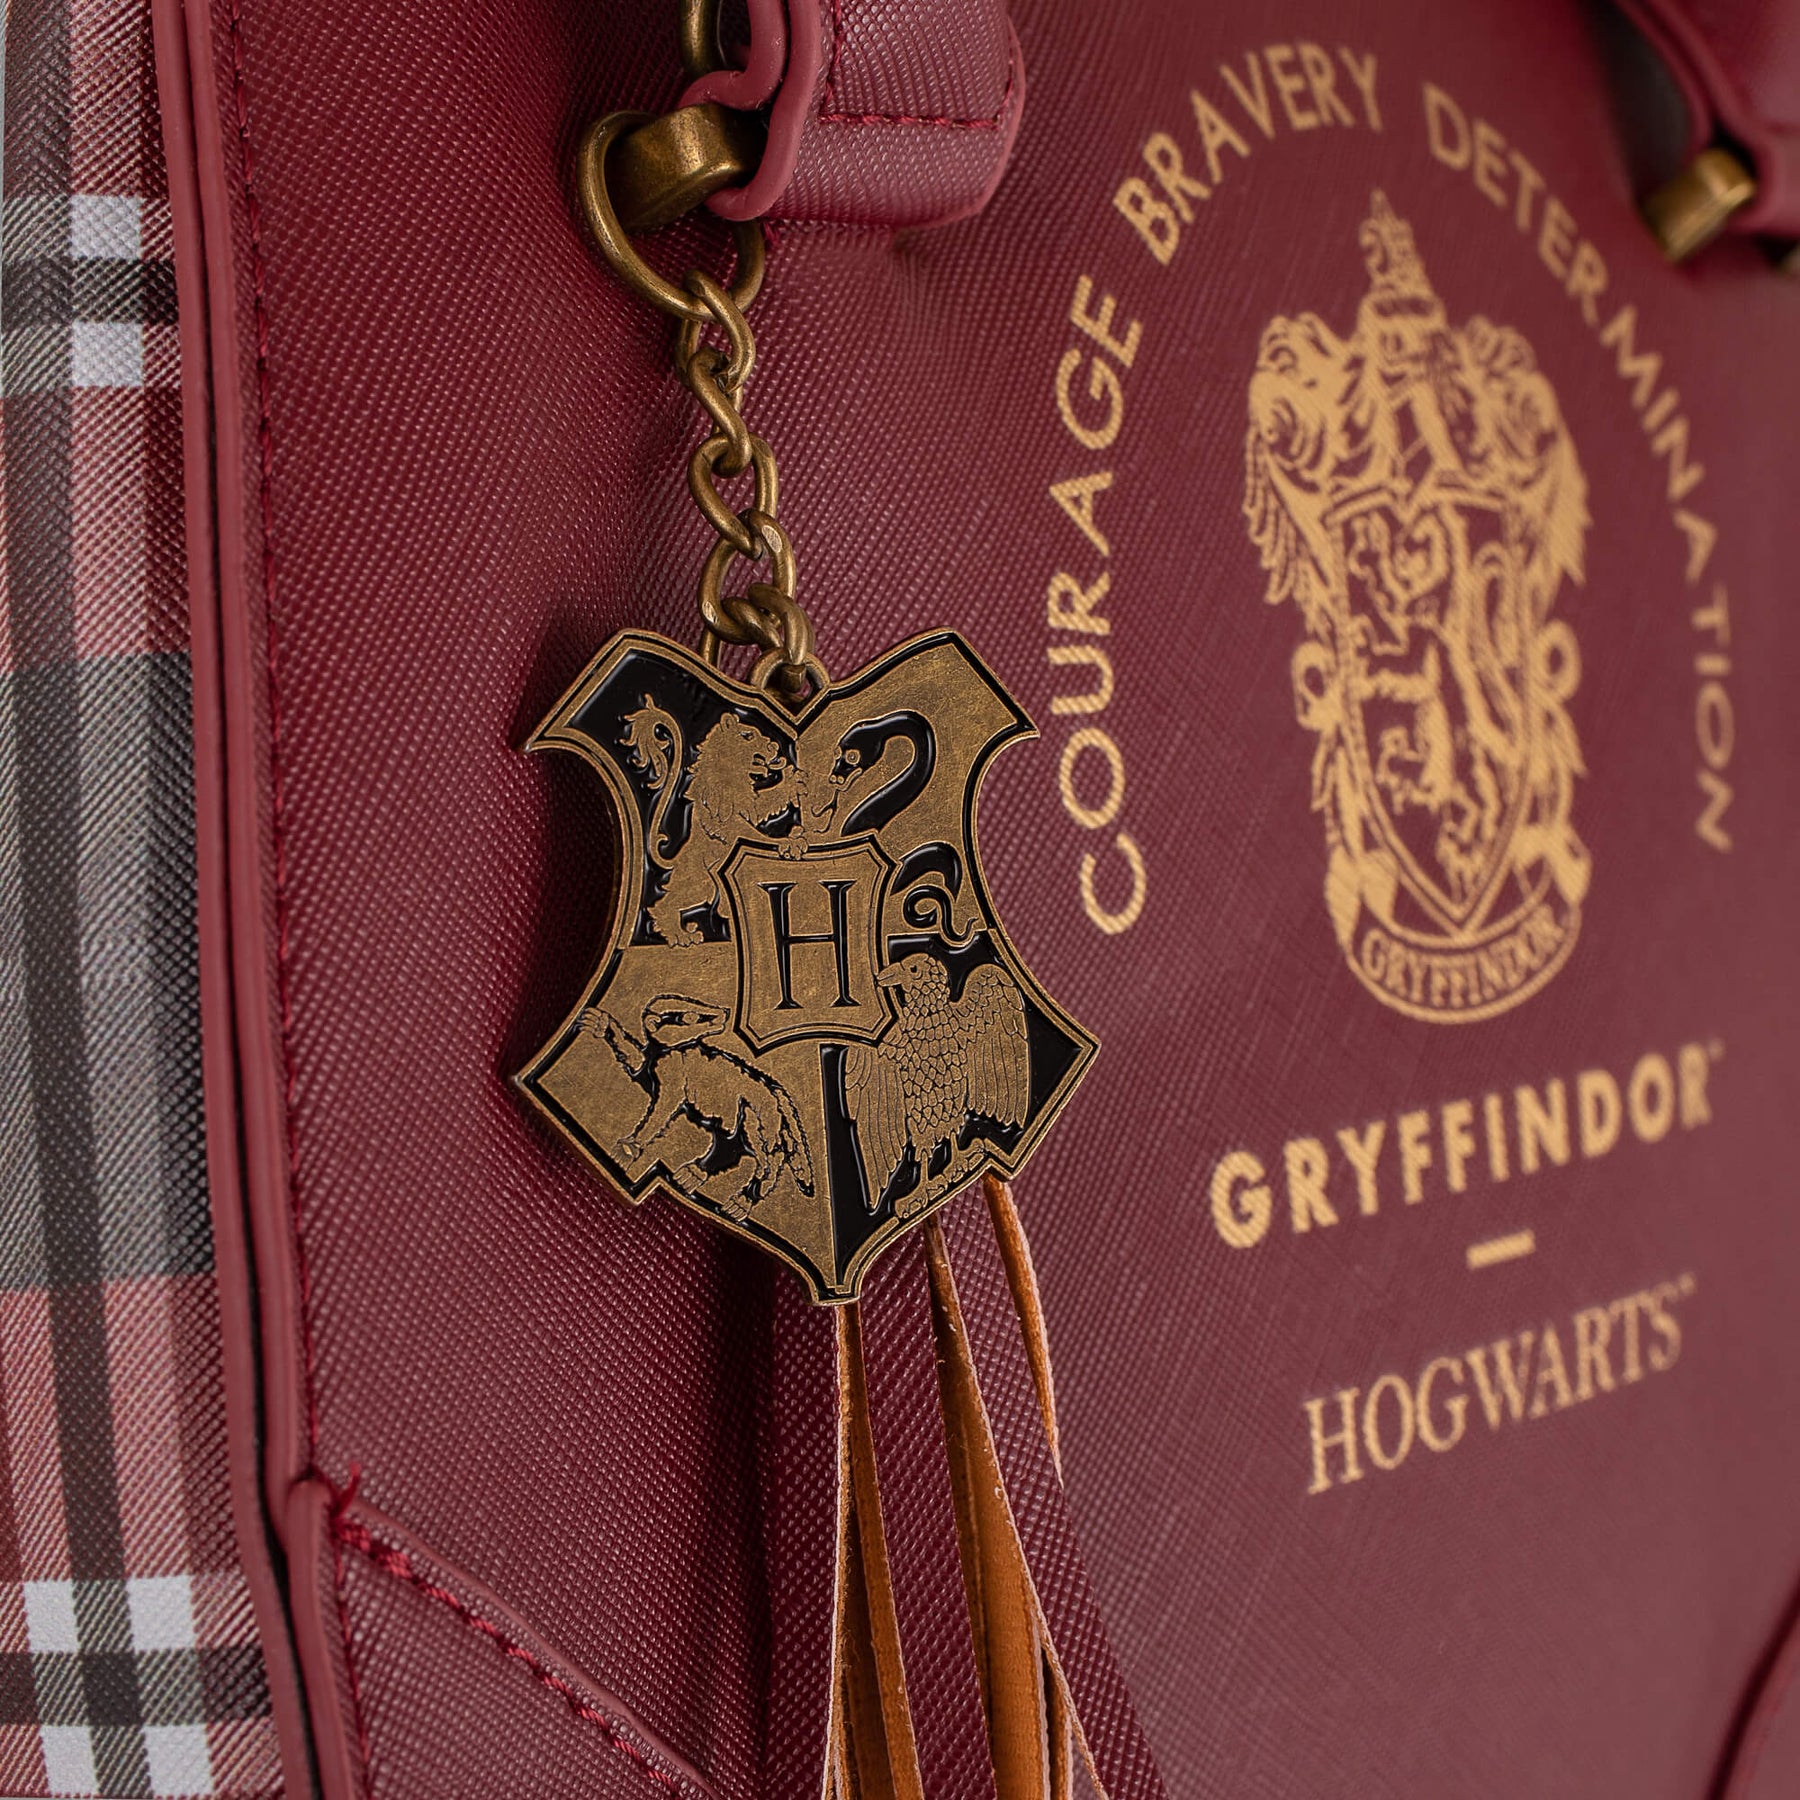 Harry Potter Gryffindor Luxury Plaid Top Handbag